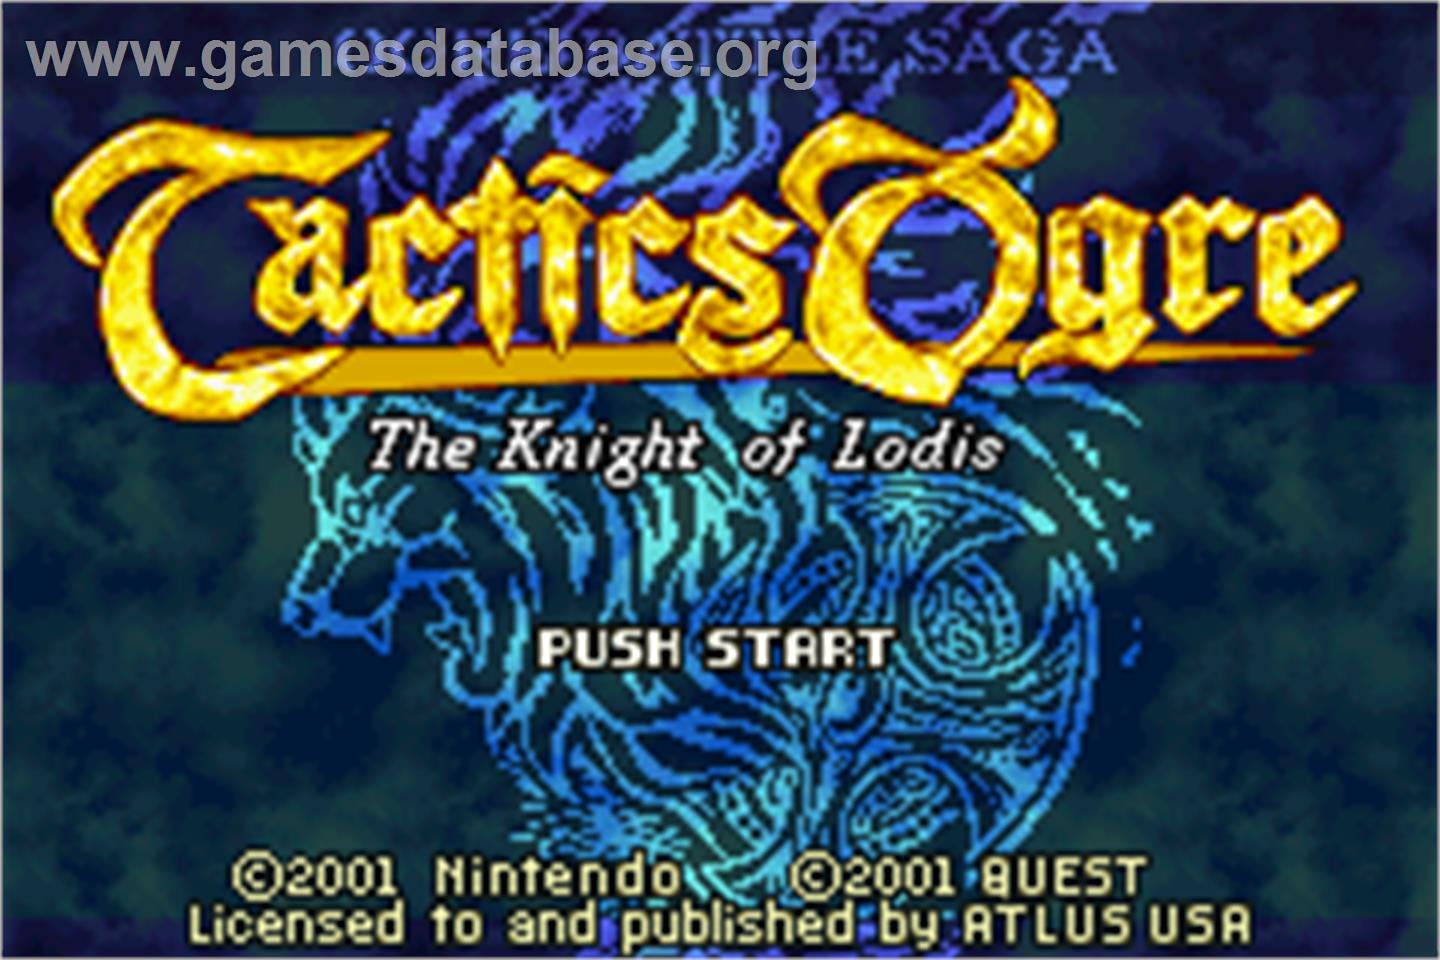 Tactics Ogre: The Knight of Lodis - Nintendo Game Boy Advance - Artwork - Title Screen